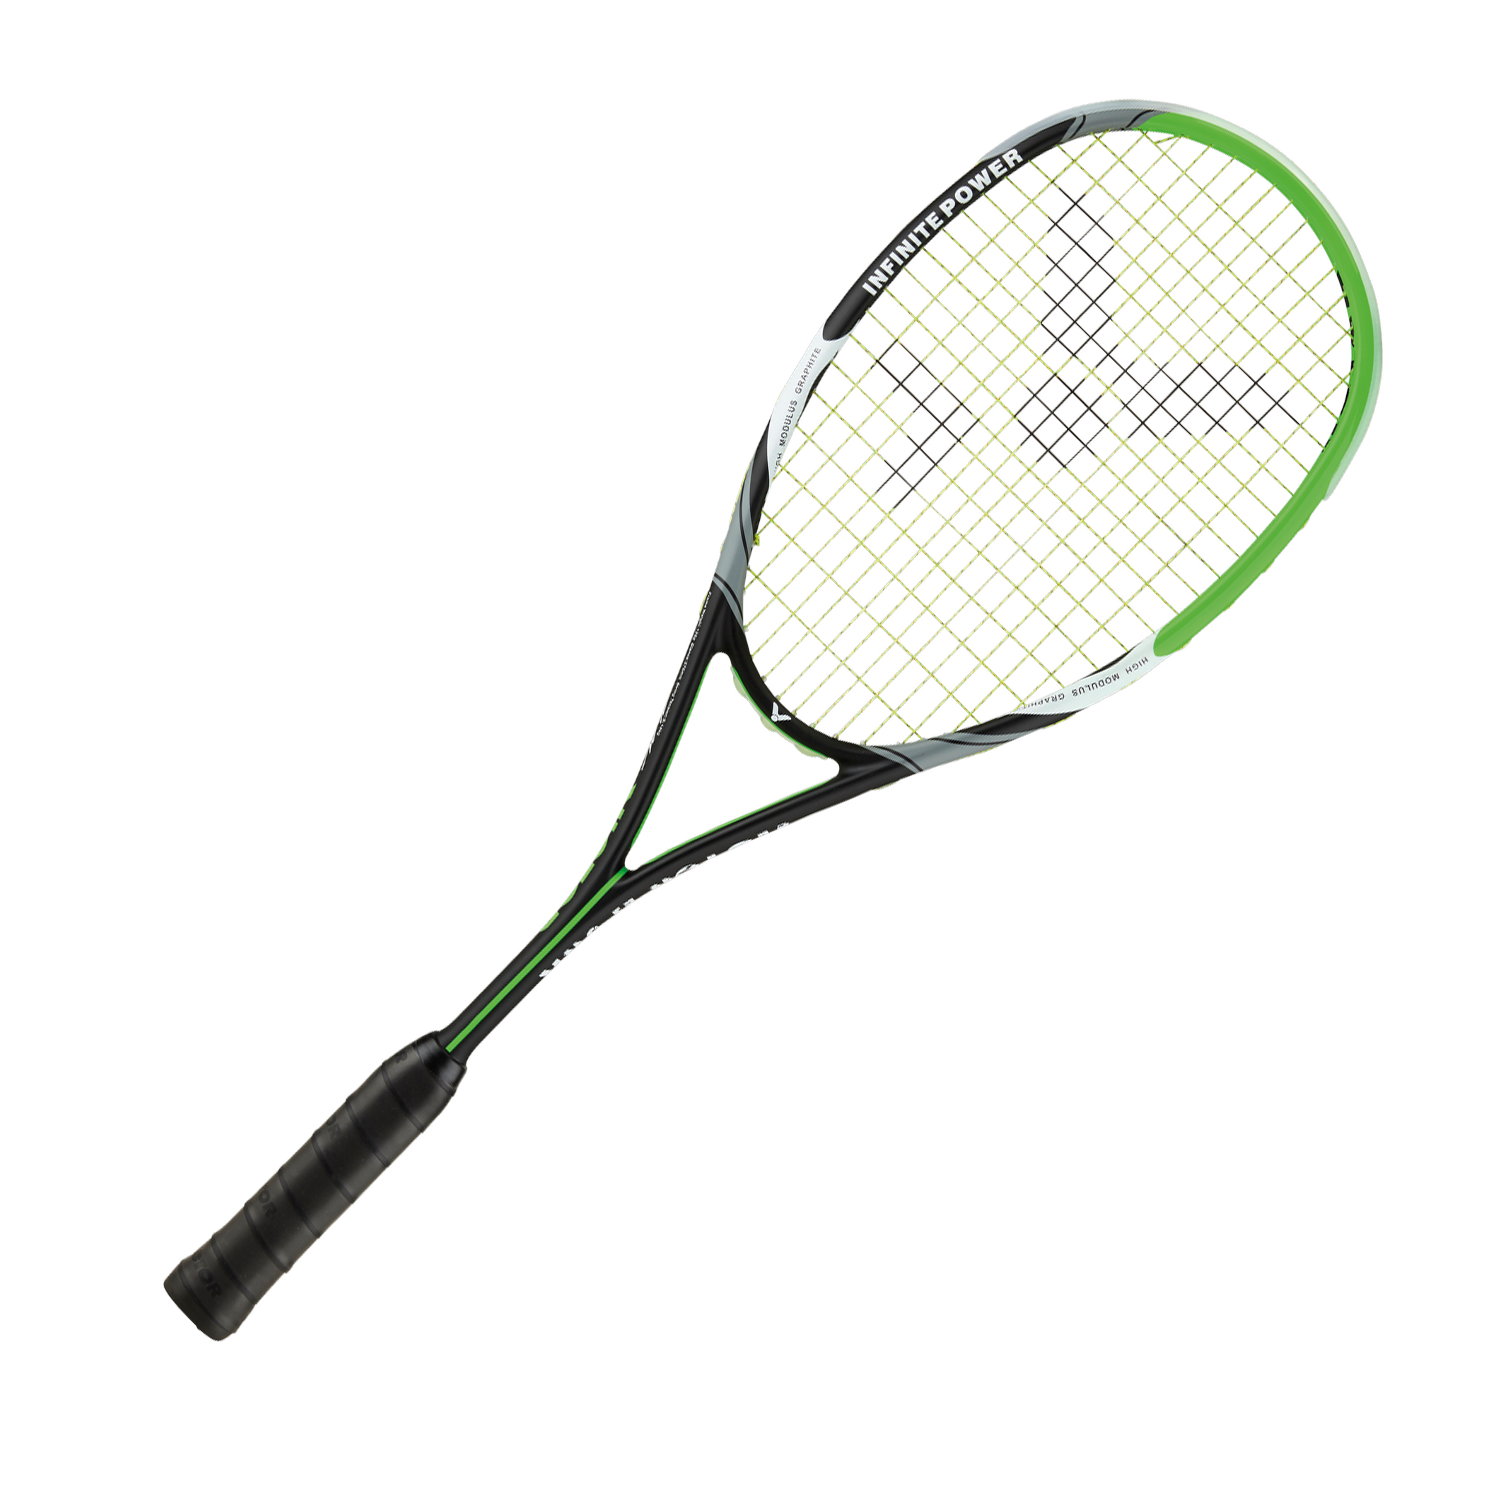 Victor IP9 9RK Squash Racket - Green/Black